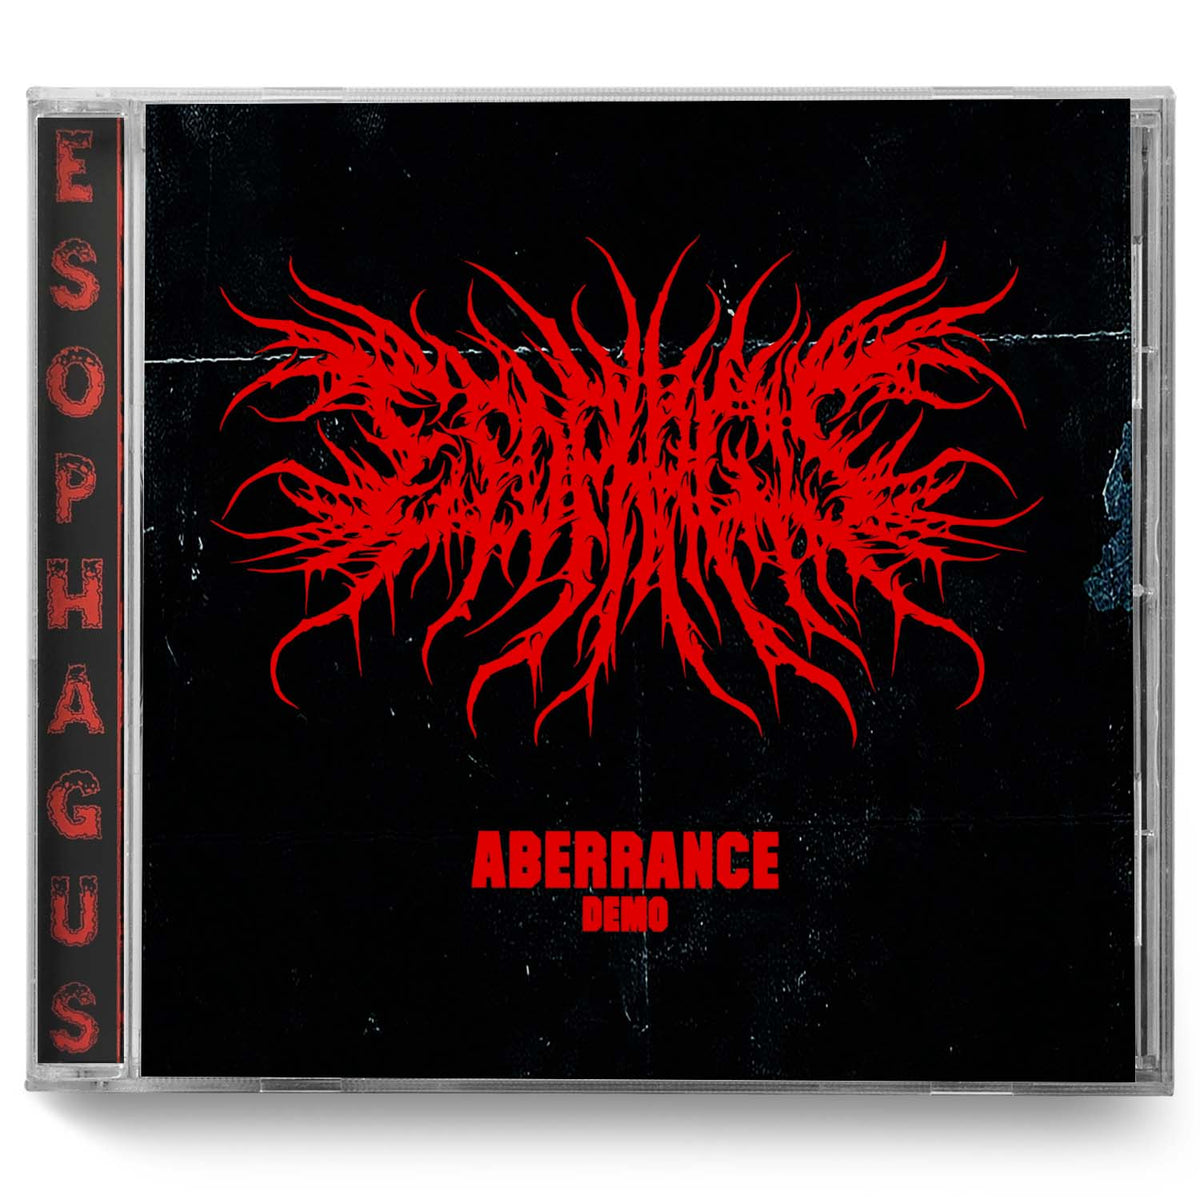 Esophagus "Aberrance" CD - Miasma Records